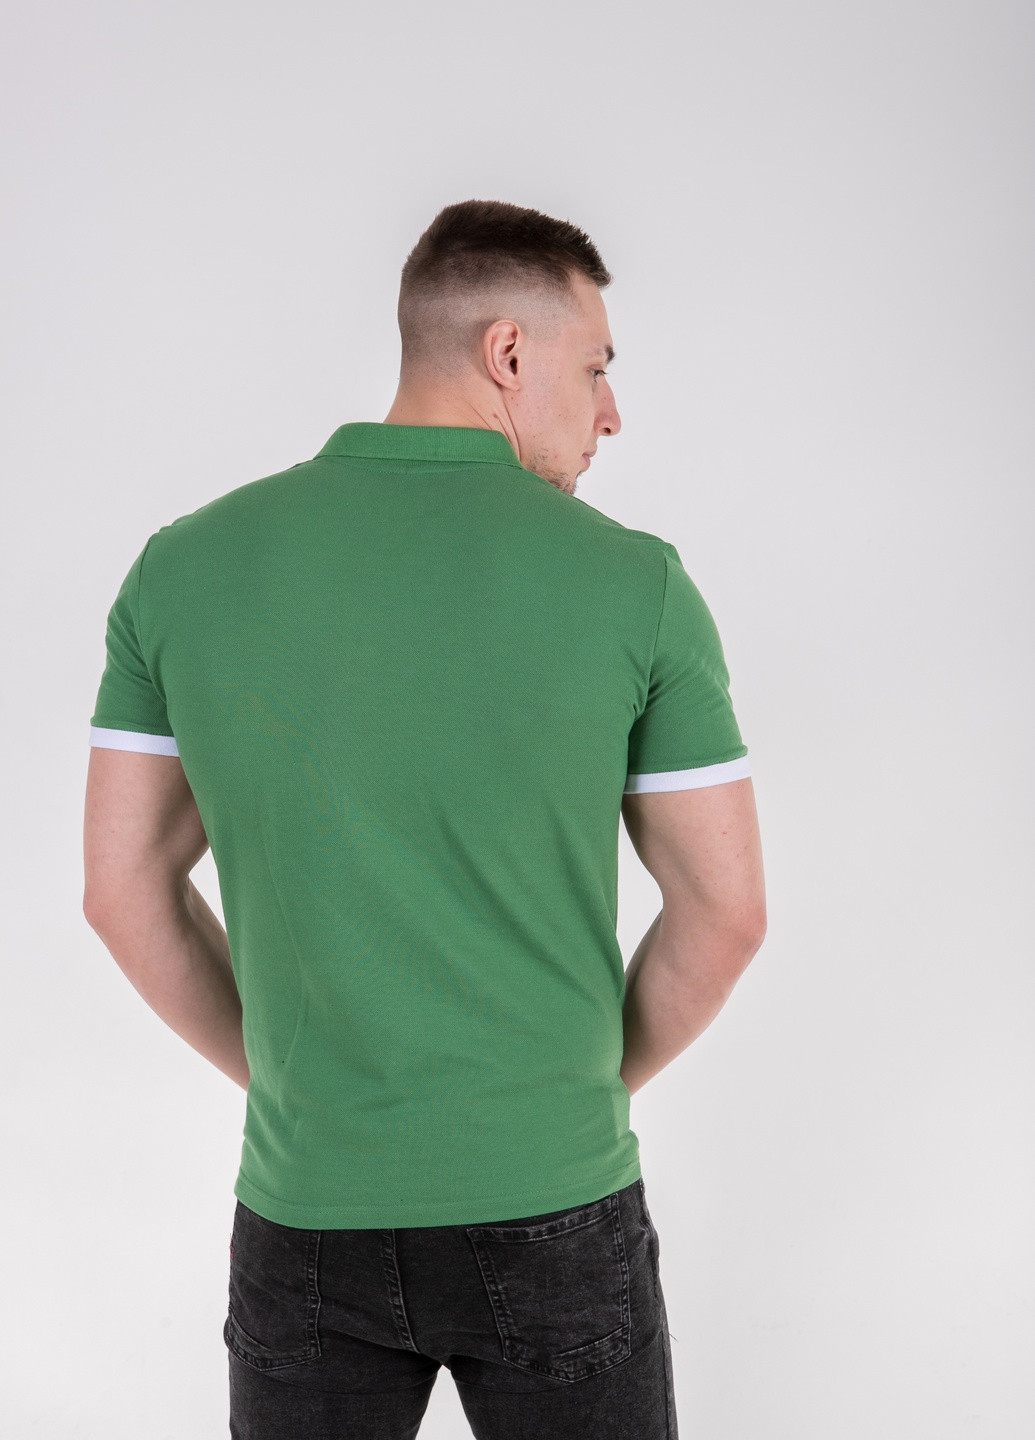 Зеленая футболка-футболка поло мужская для мужчин TvoePolo